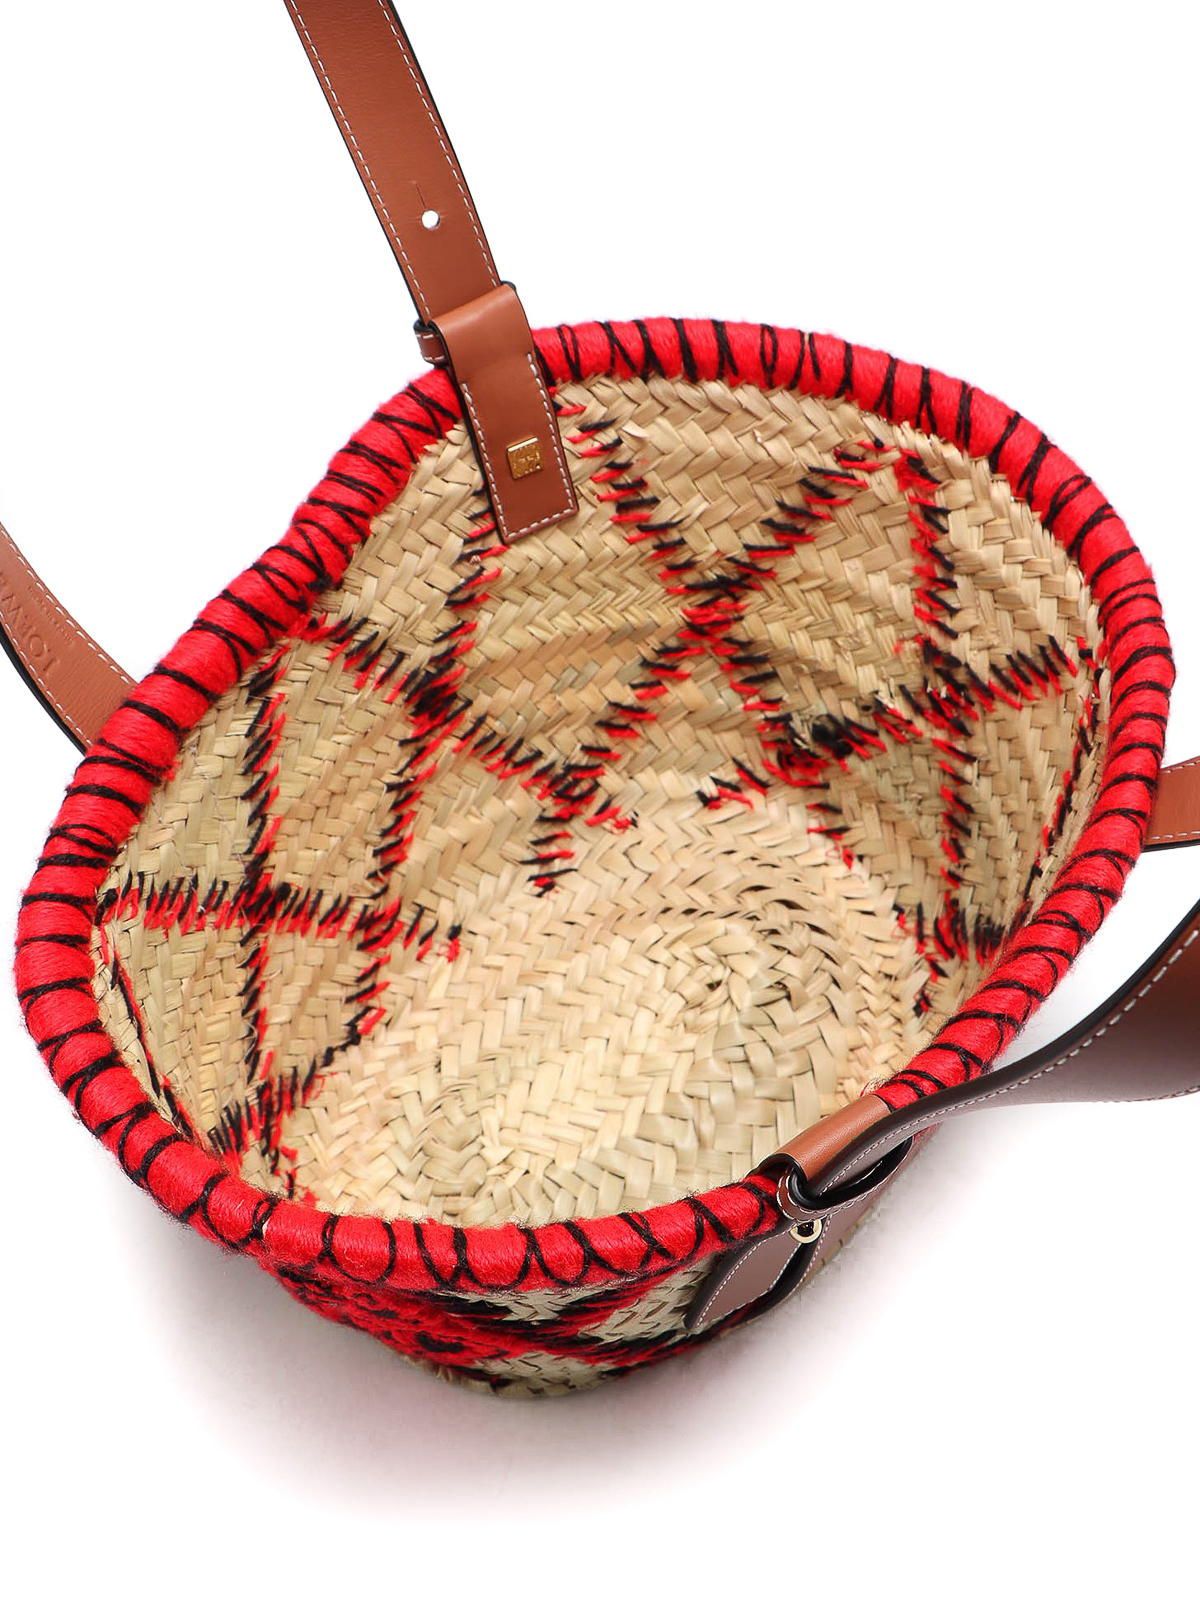 LOEWE Animals Basket Small Straw Tote Bag Red